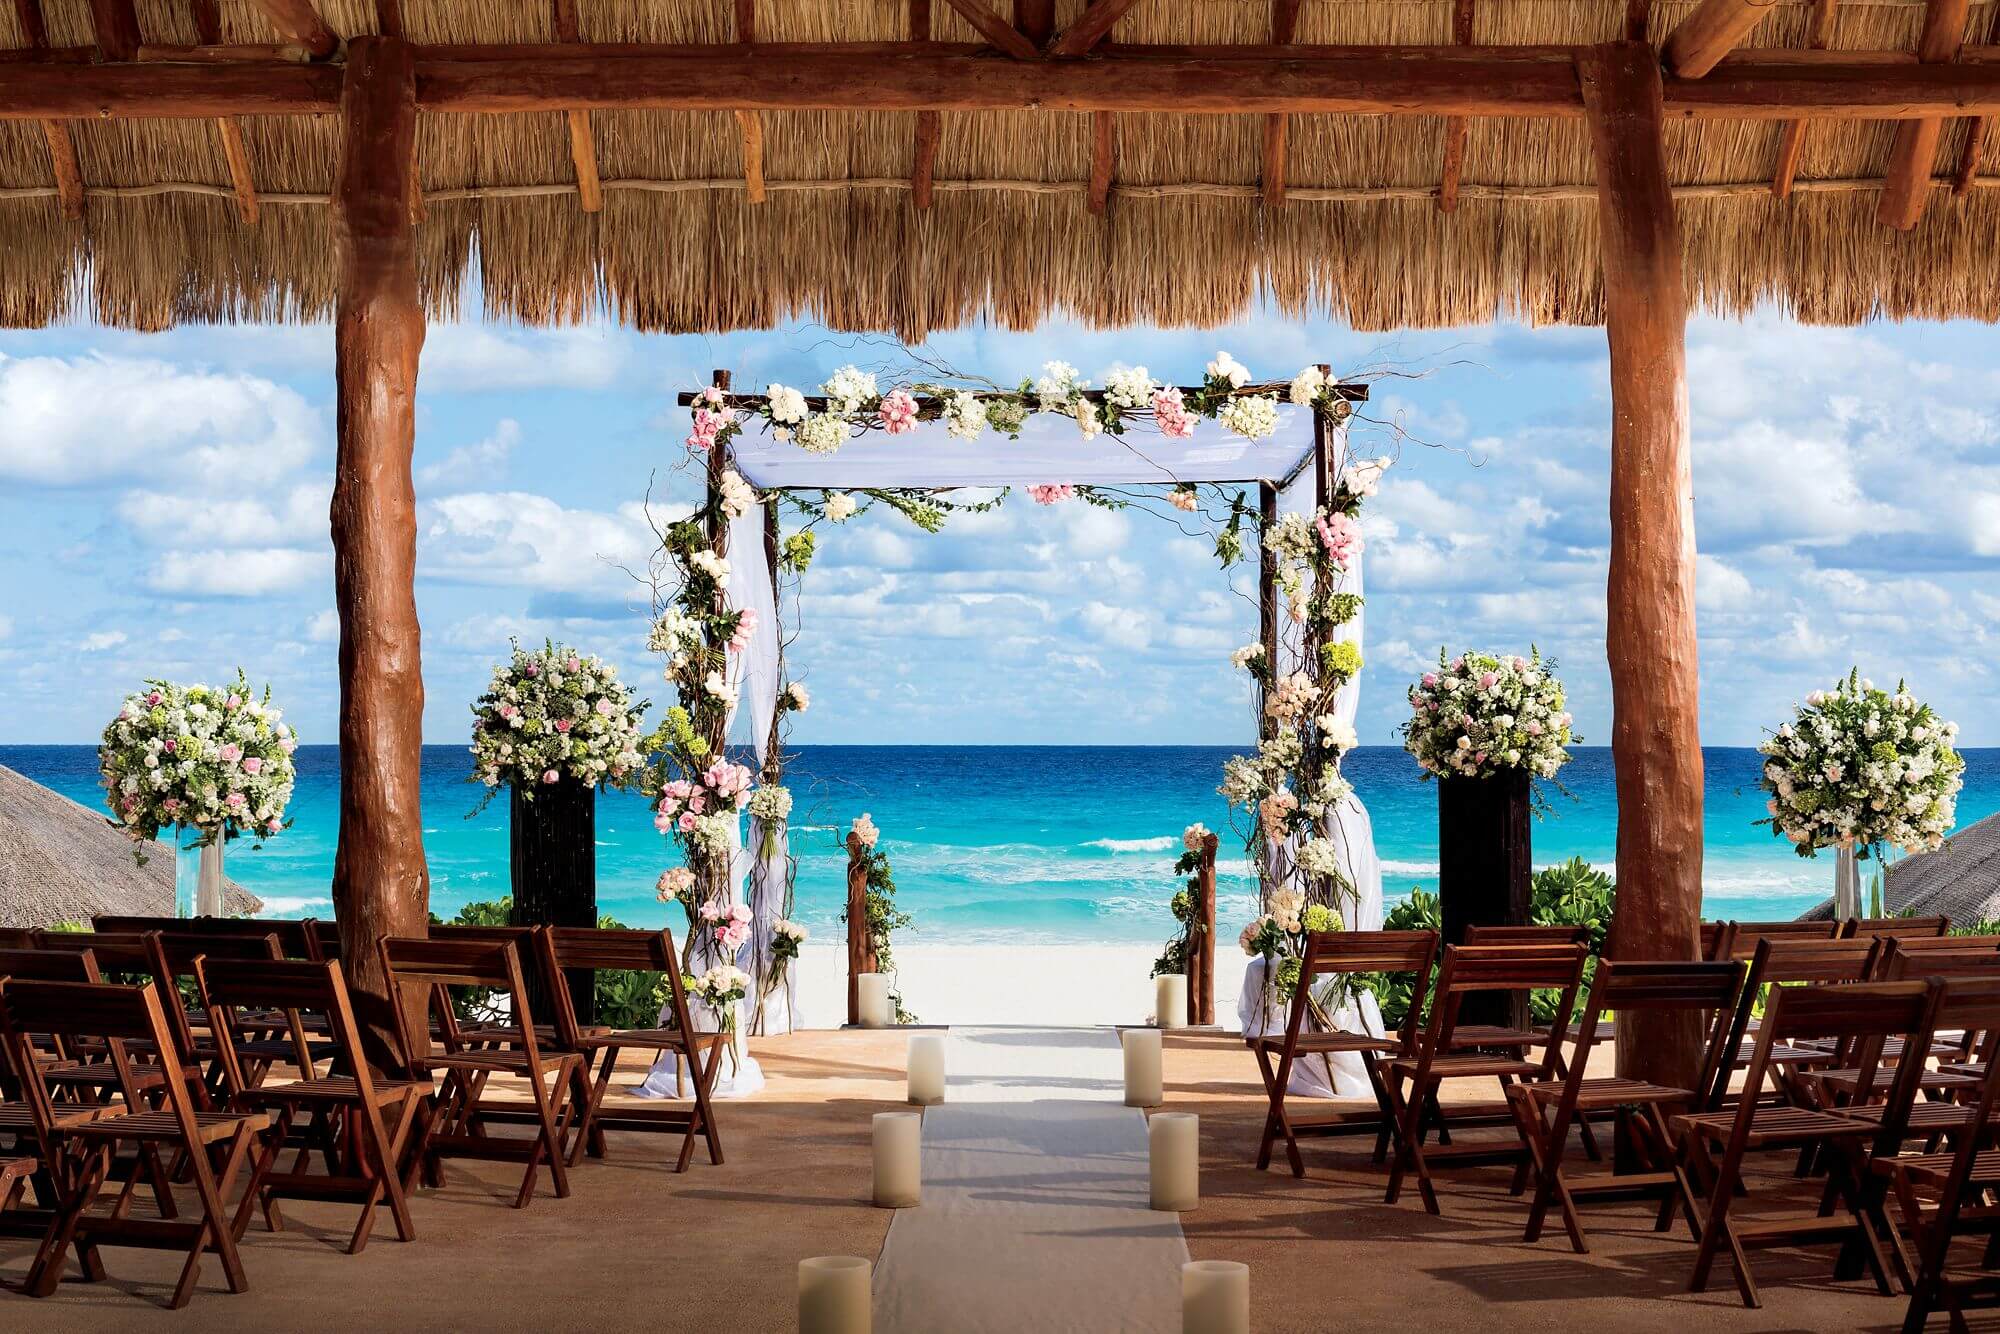 A Few Benefits of a Destination Wedding in Cancun